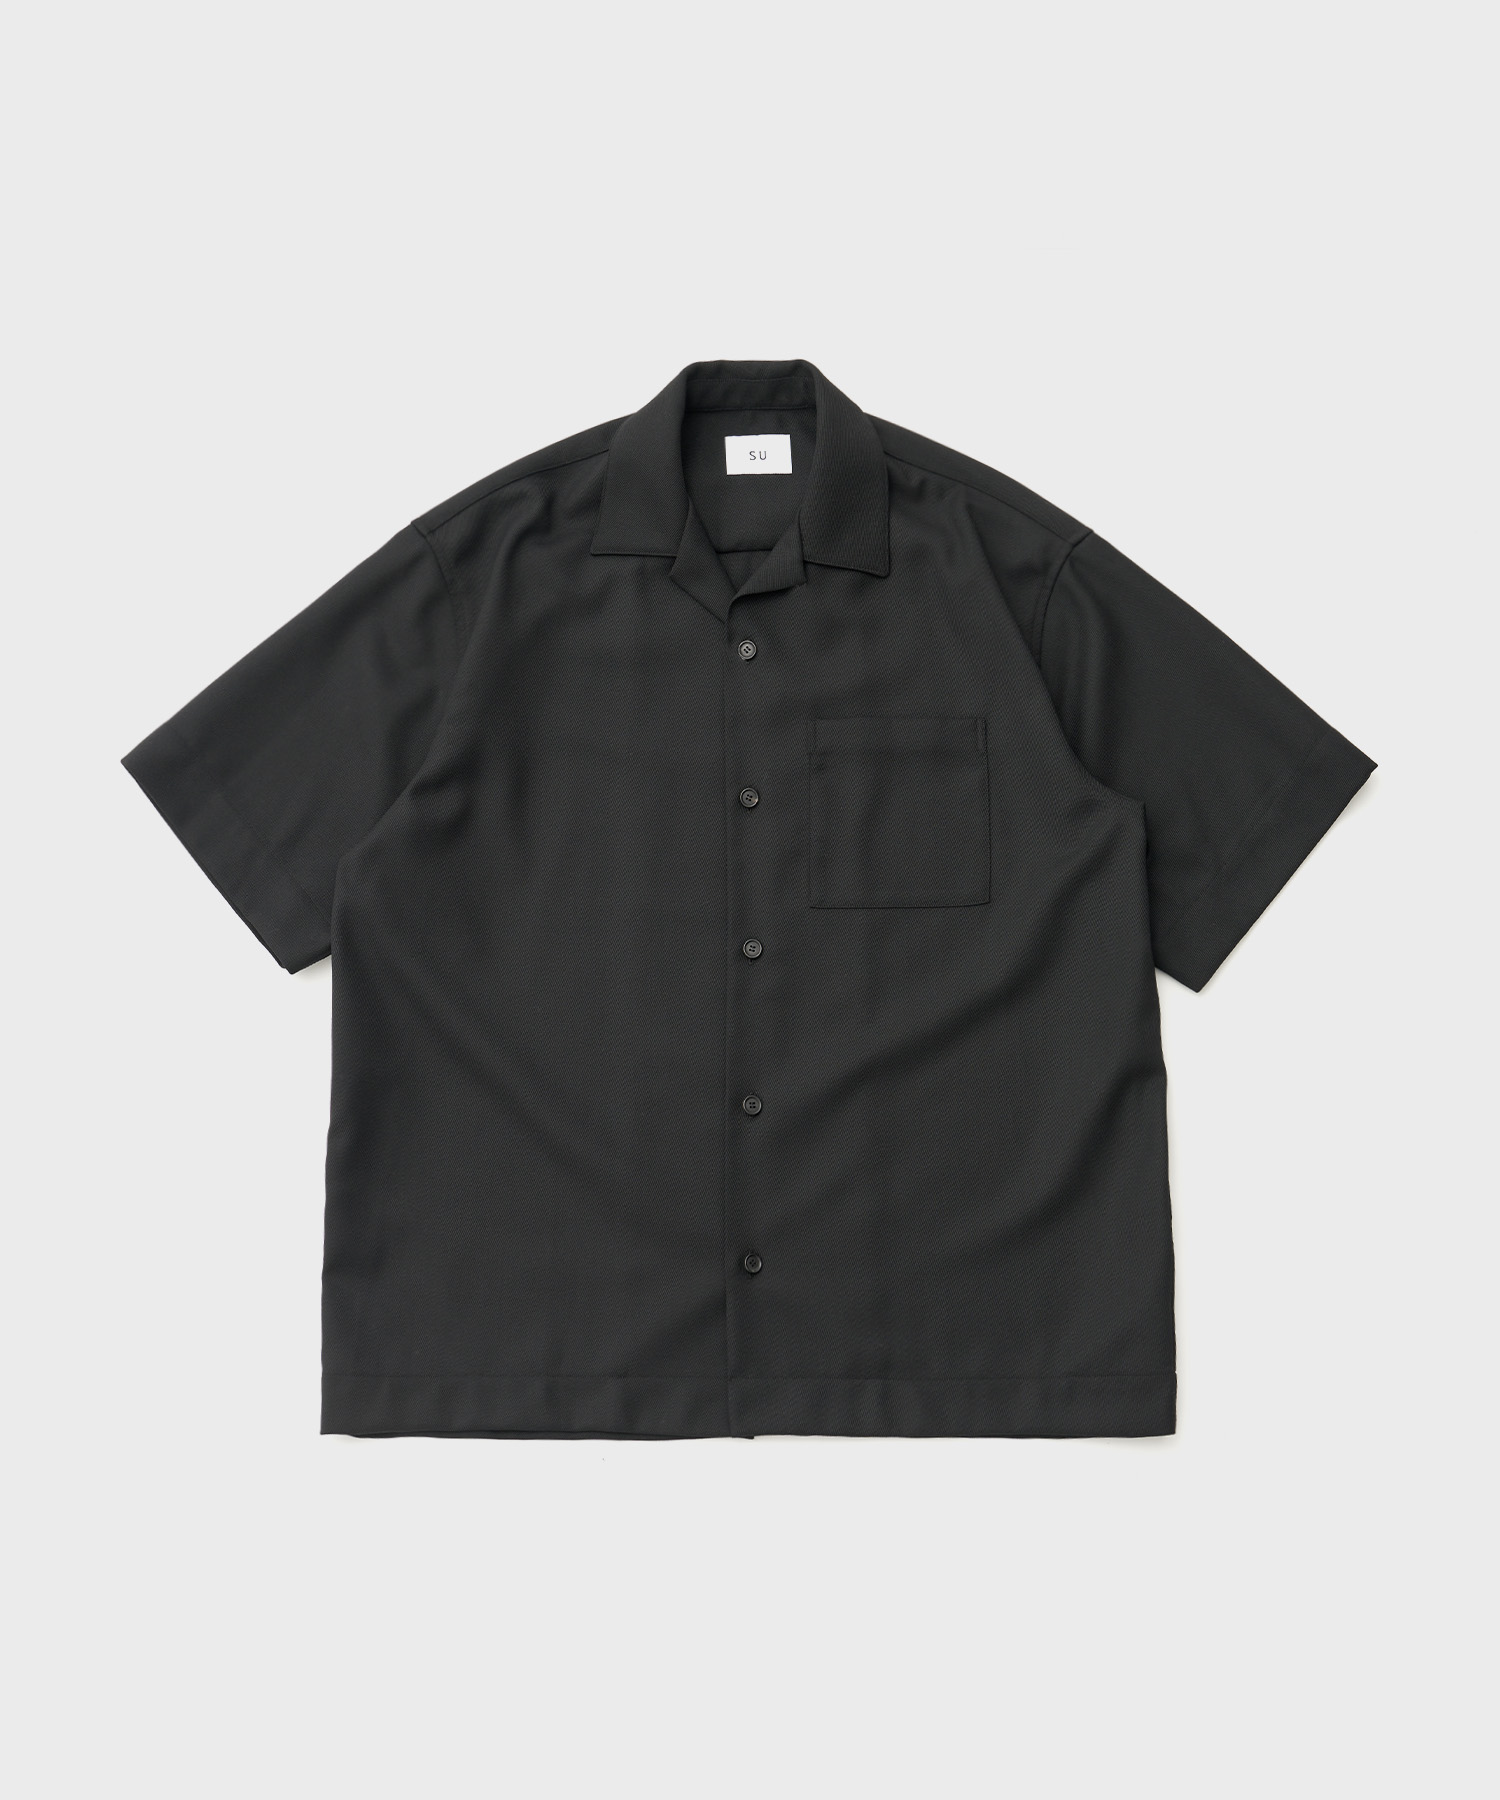 S/S Shirt (Black)